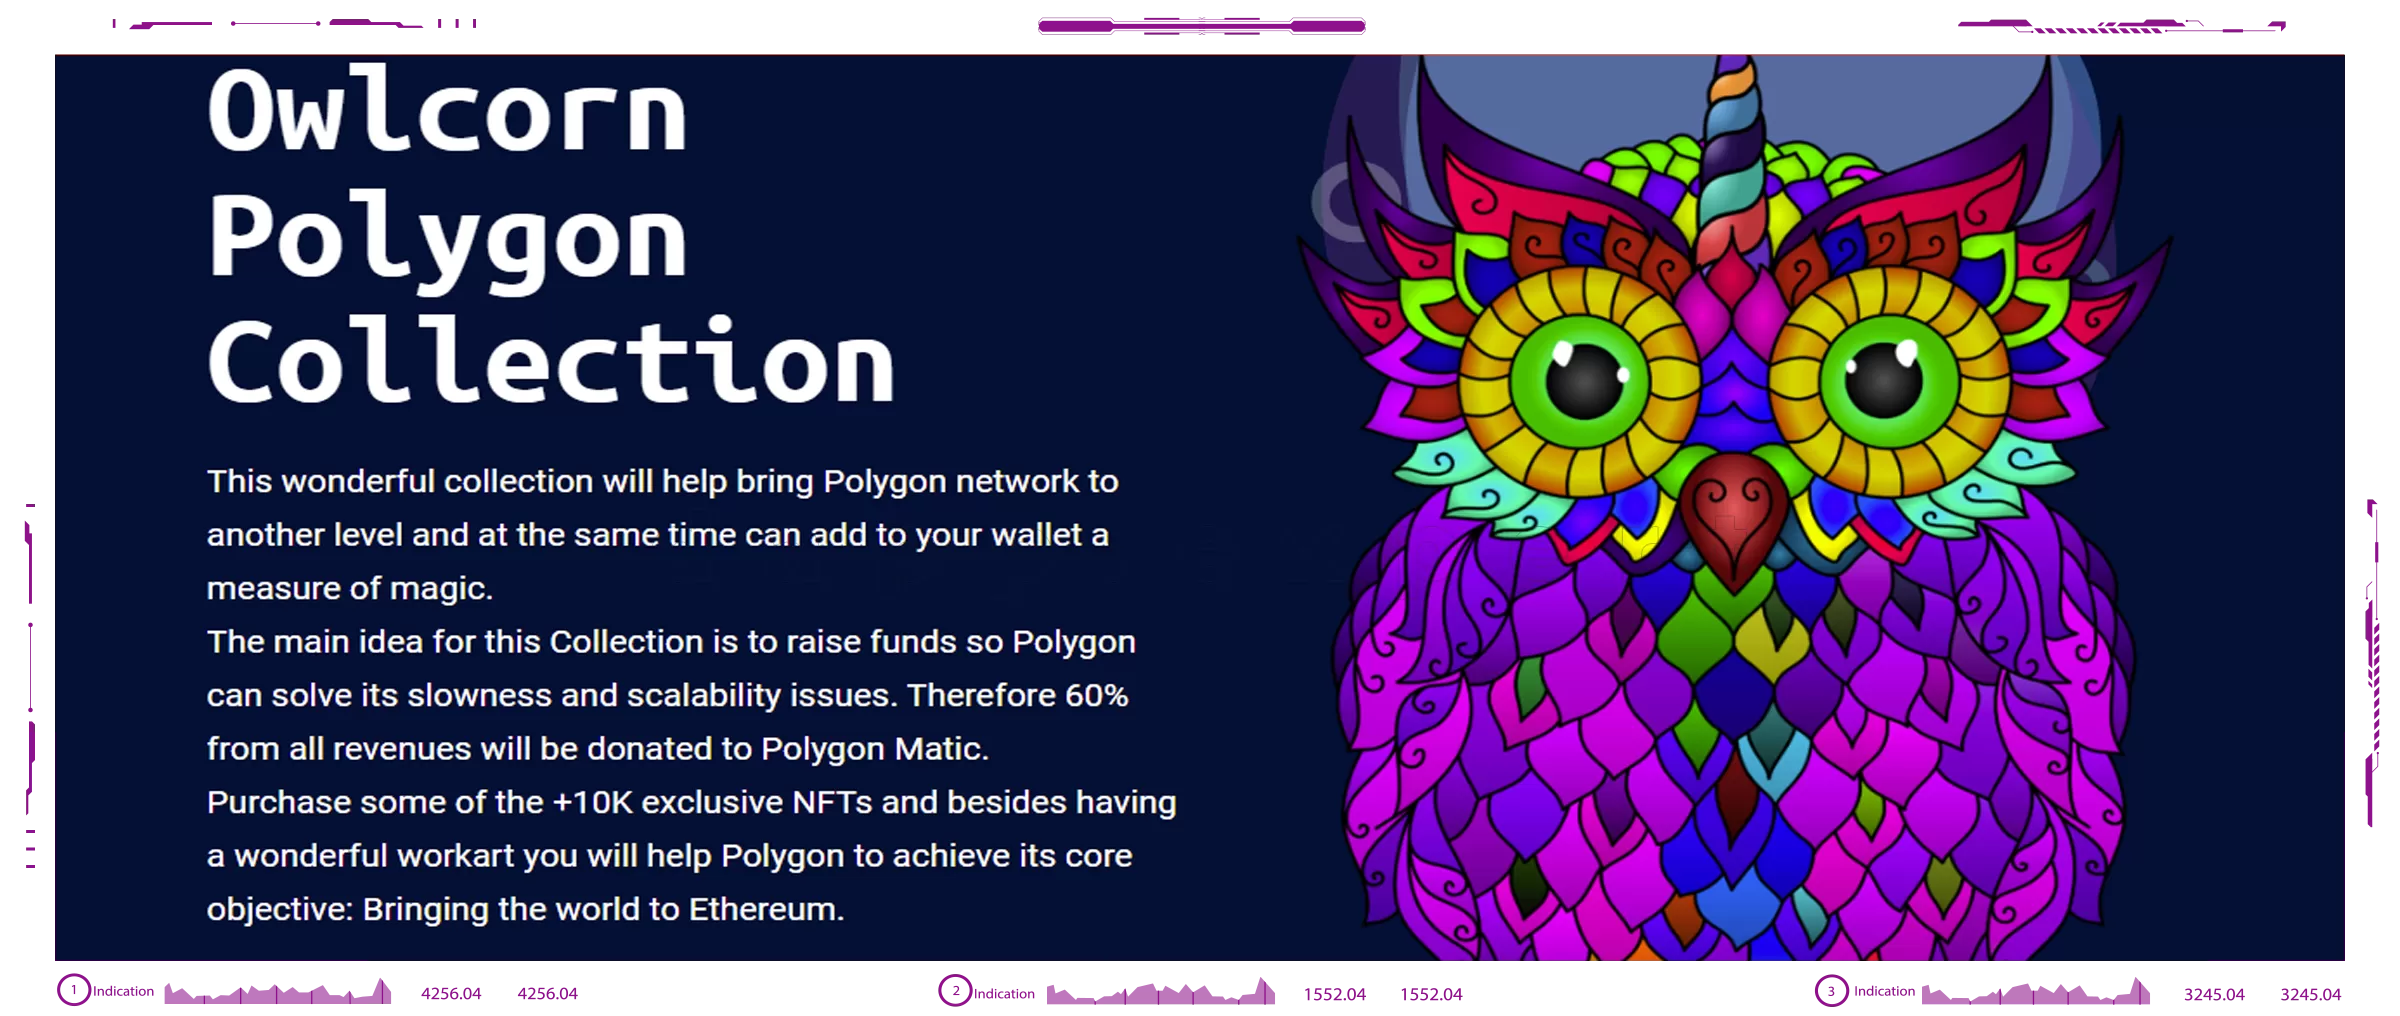 Dapp Owlcorn Polygon Collection